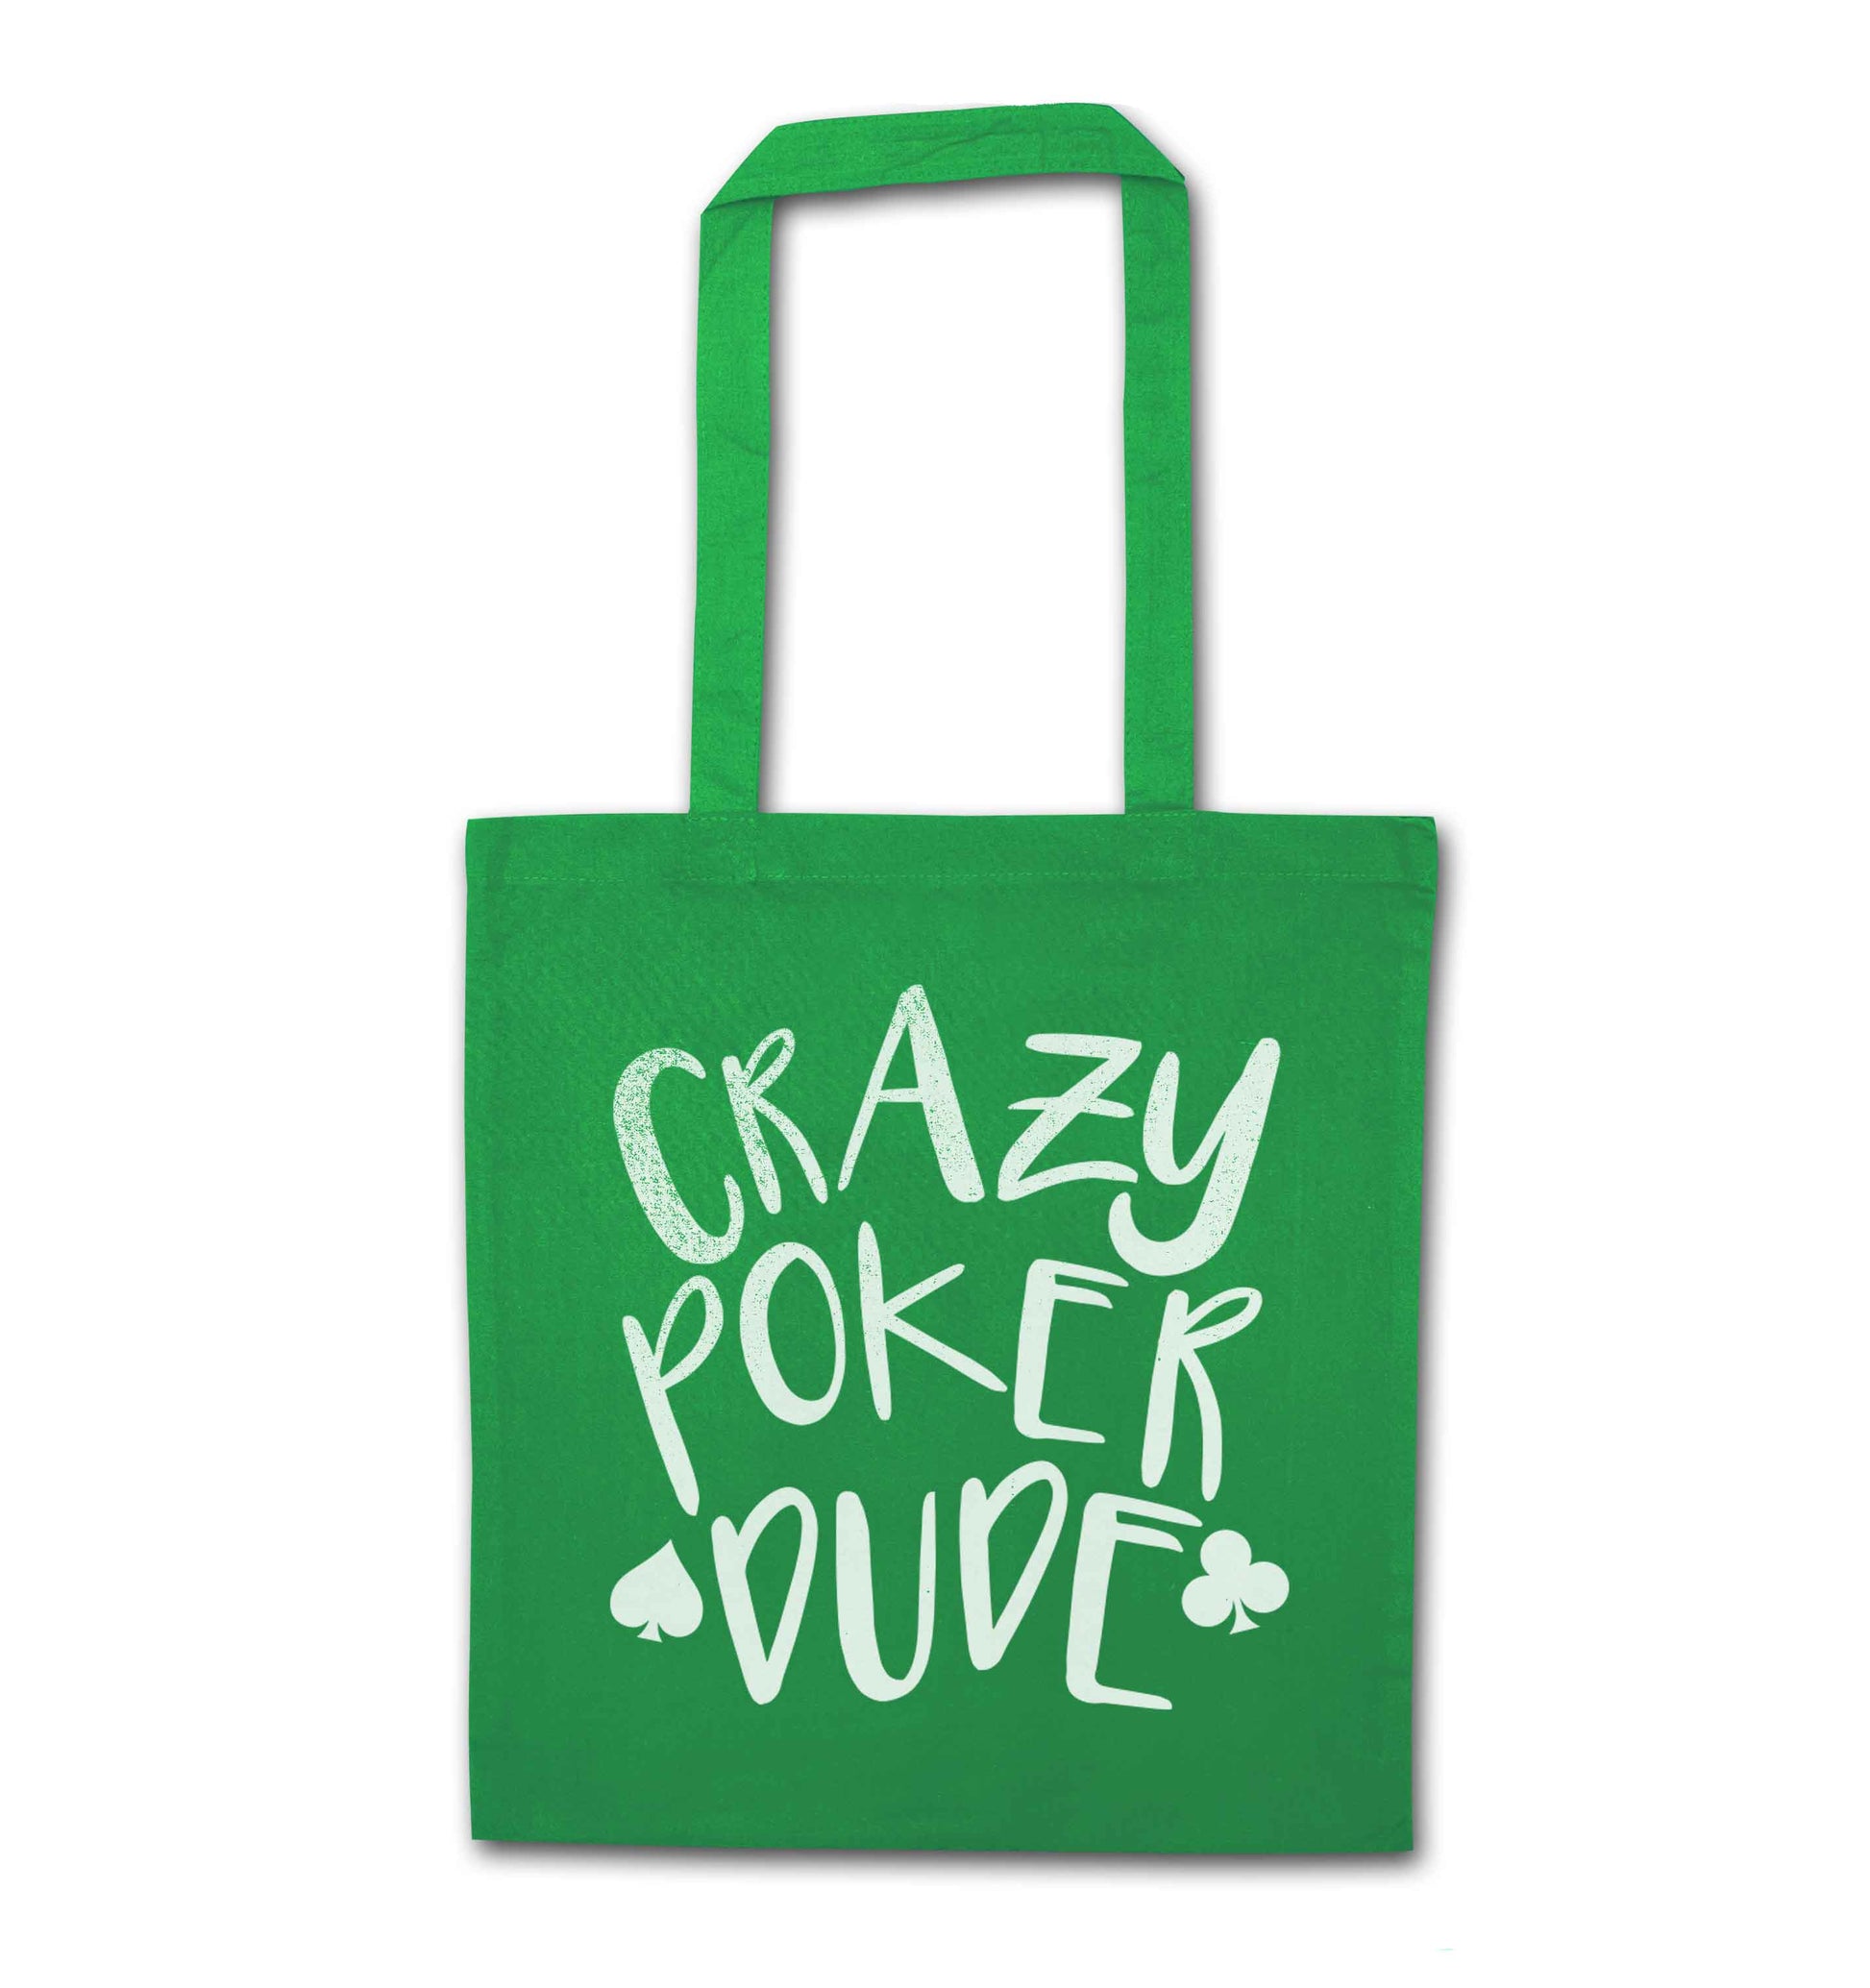 Crazy poker dude green tote bag